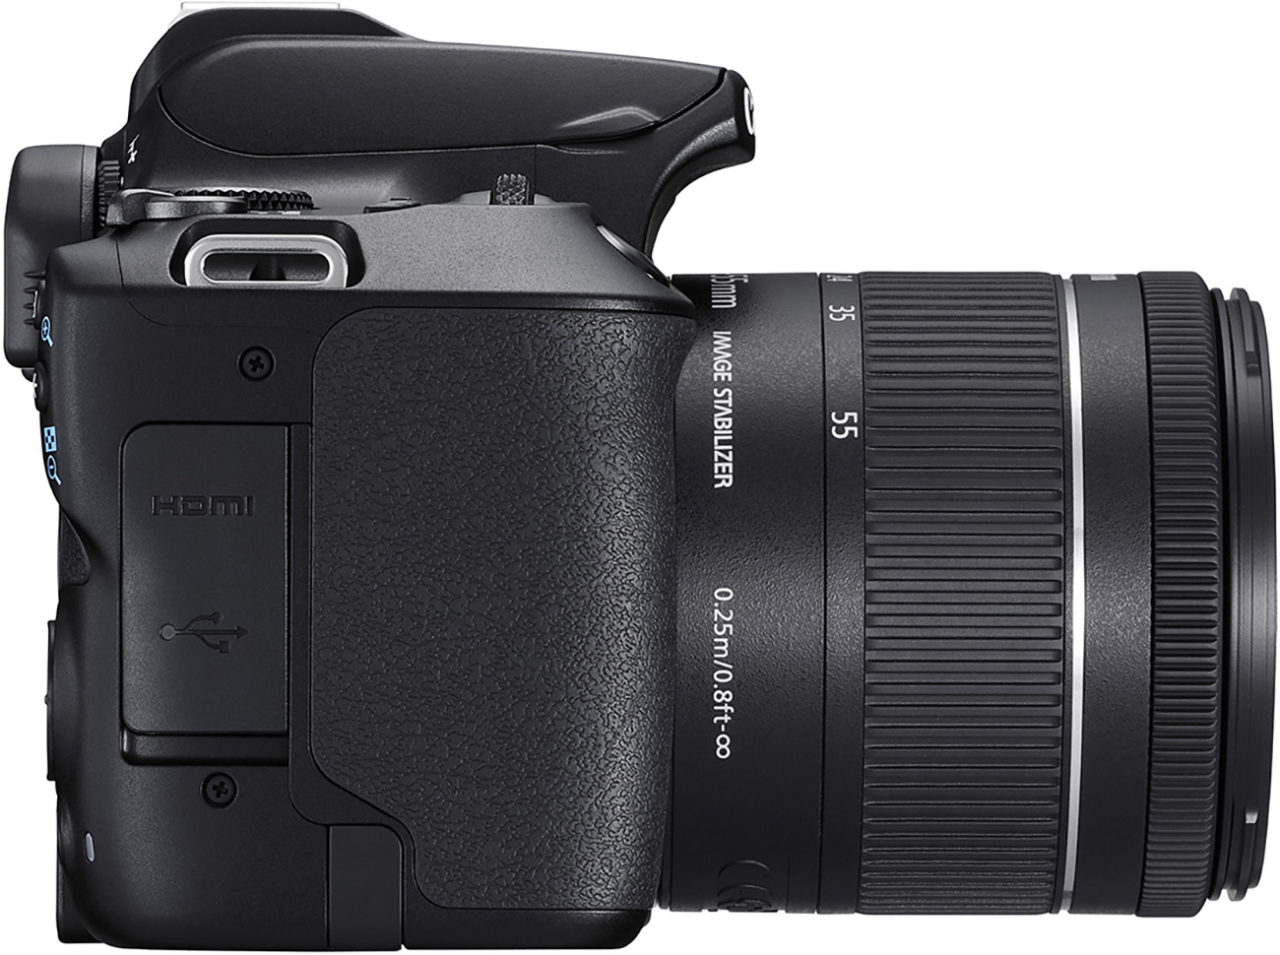 Canon EOS 250D review (Rebel SL3) - Pocket-lint